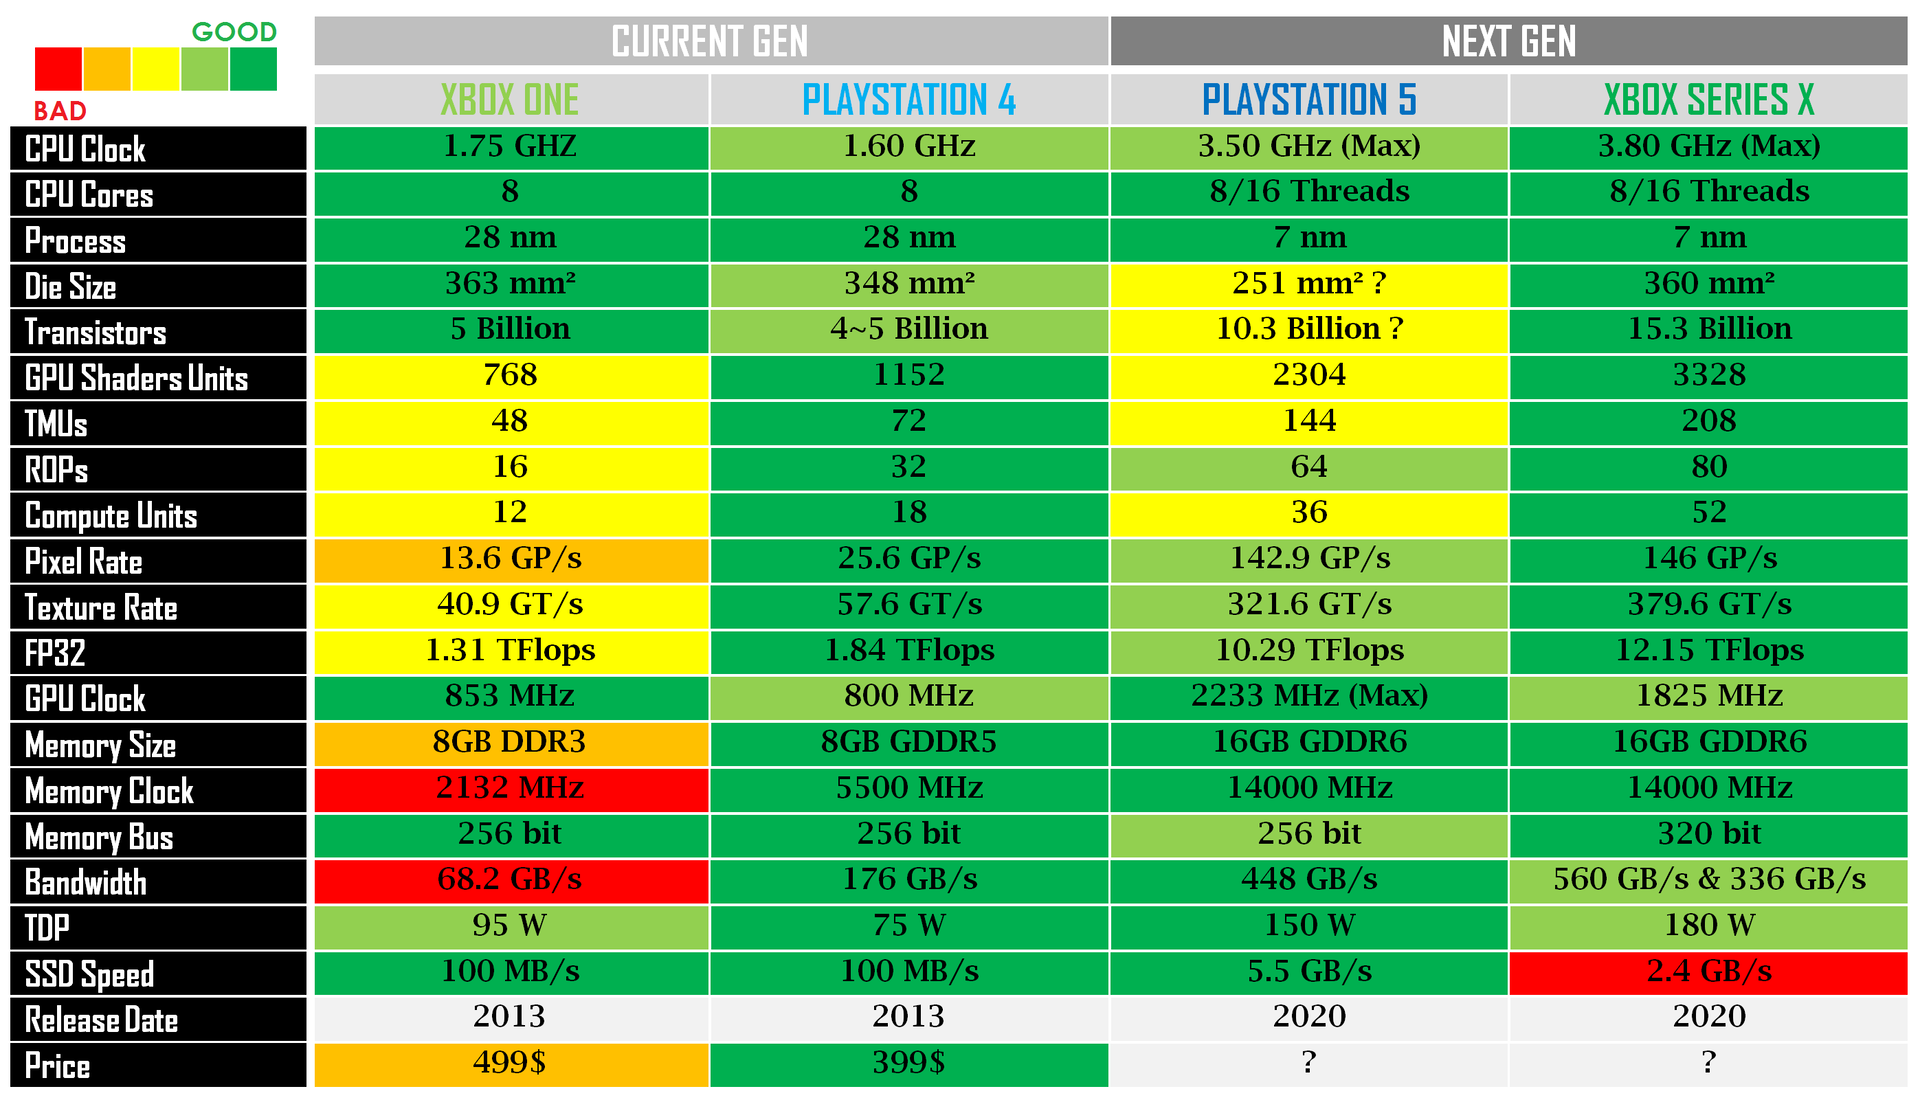 Playstation 5 upgrade comparison